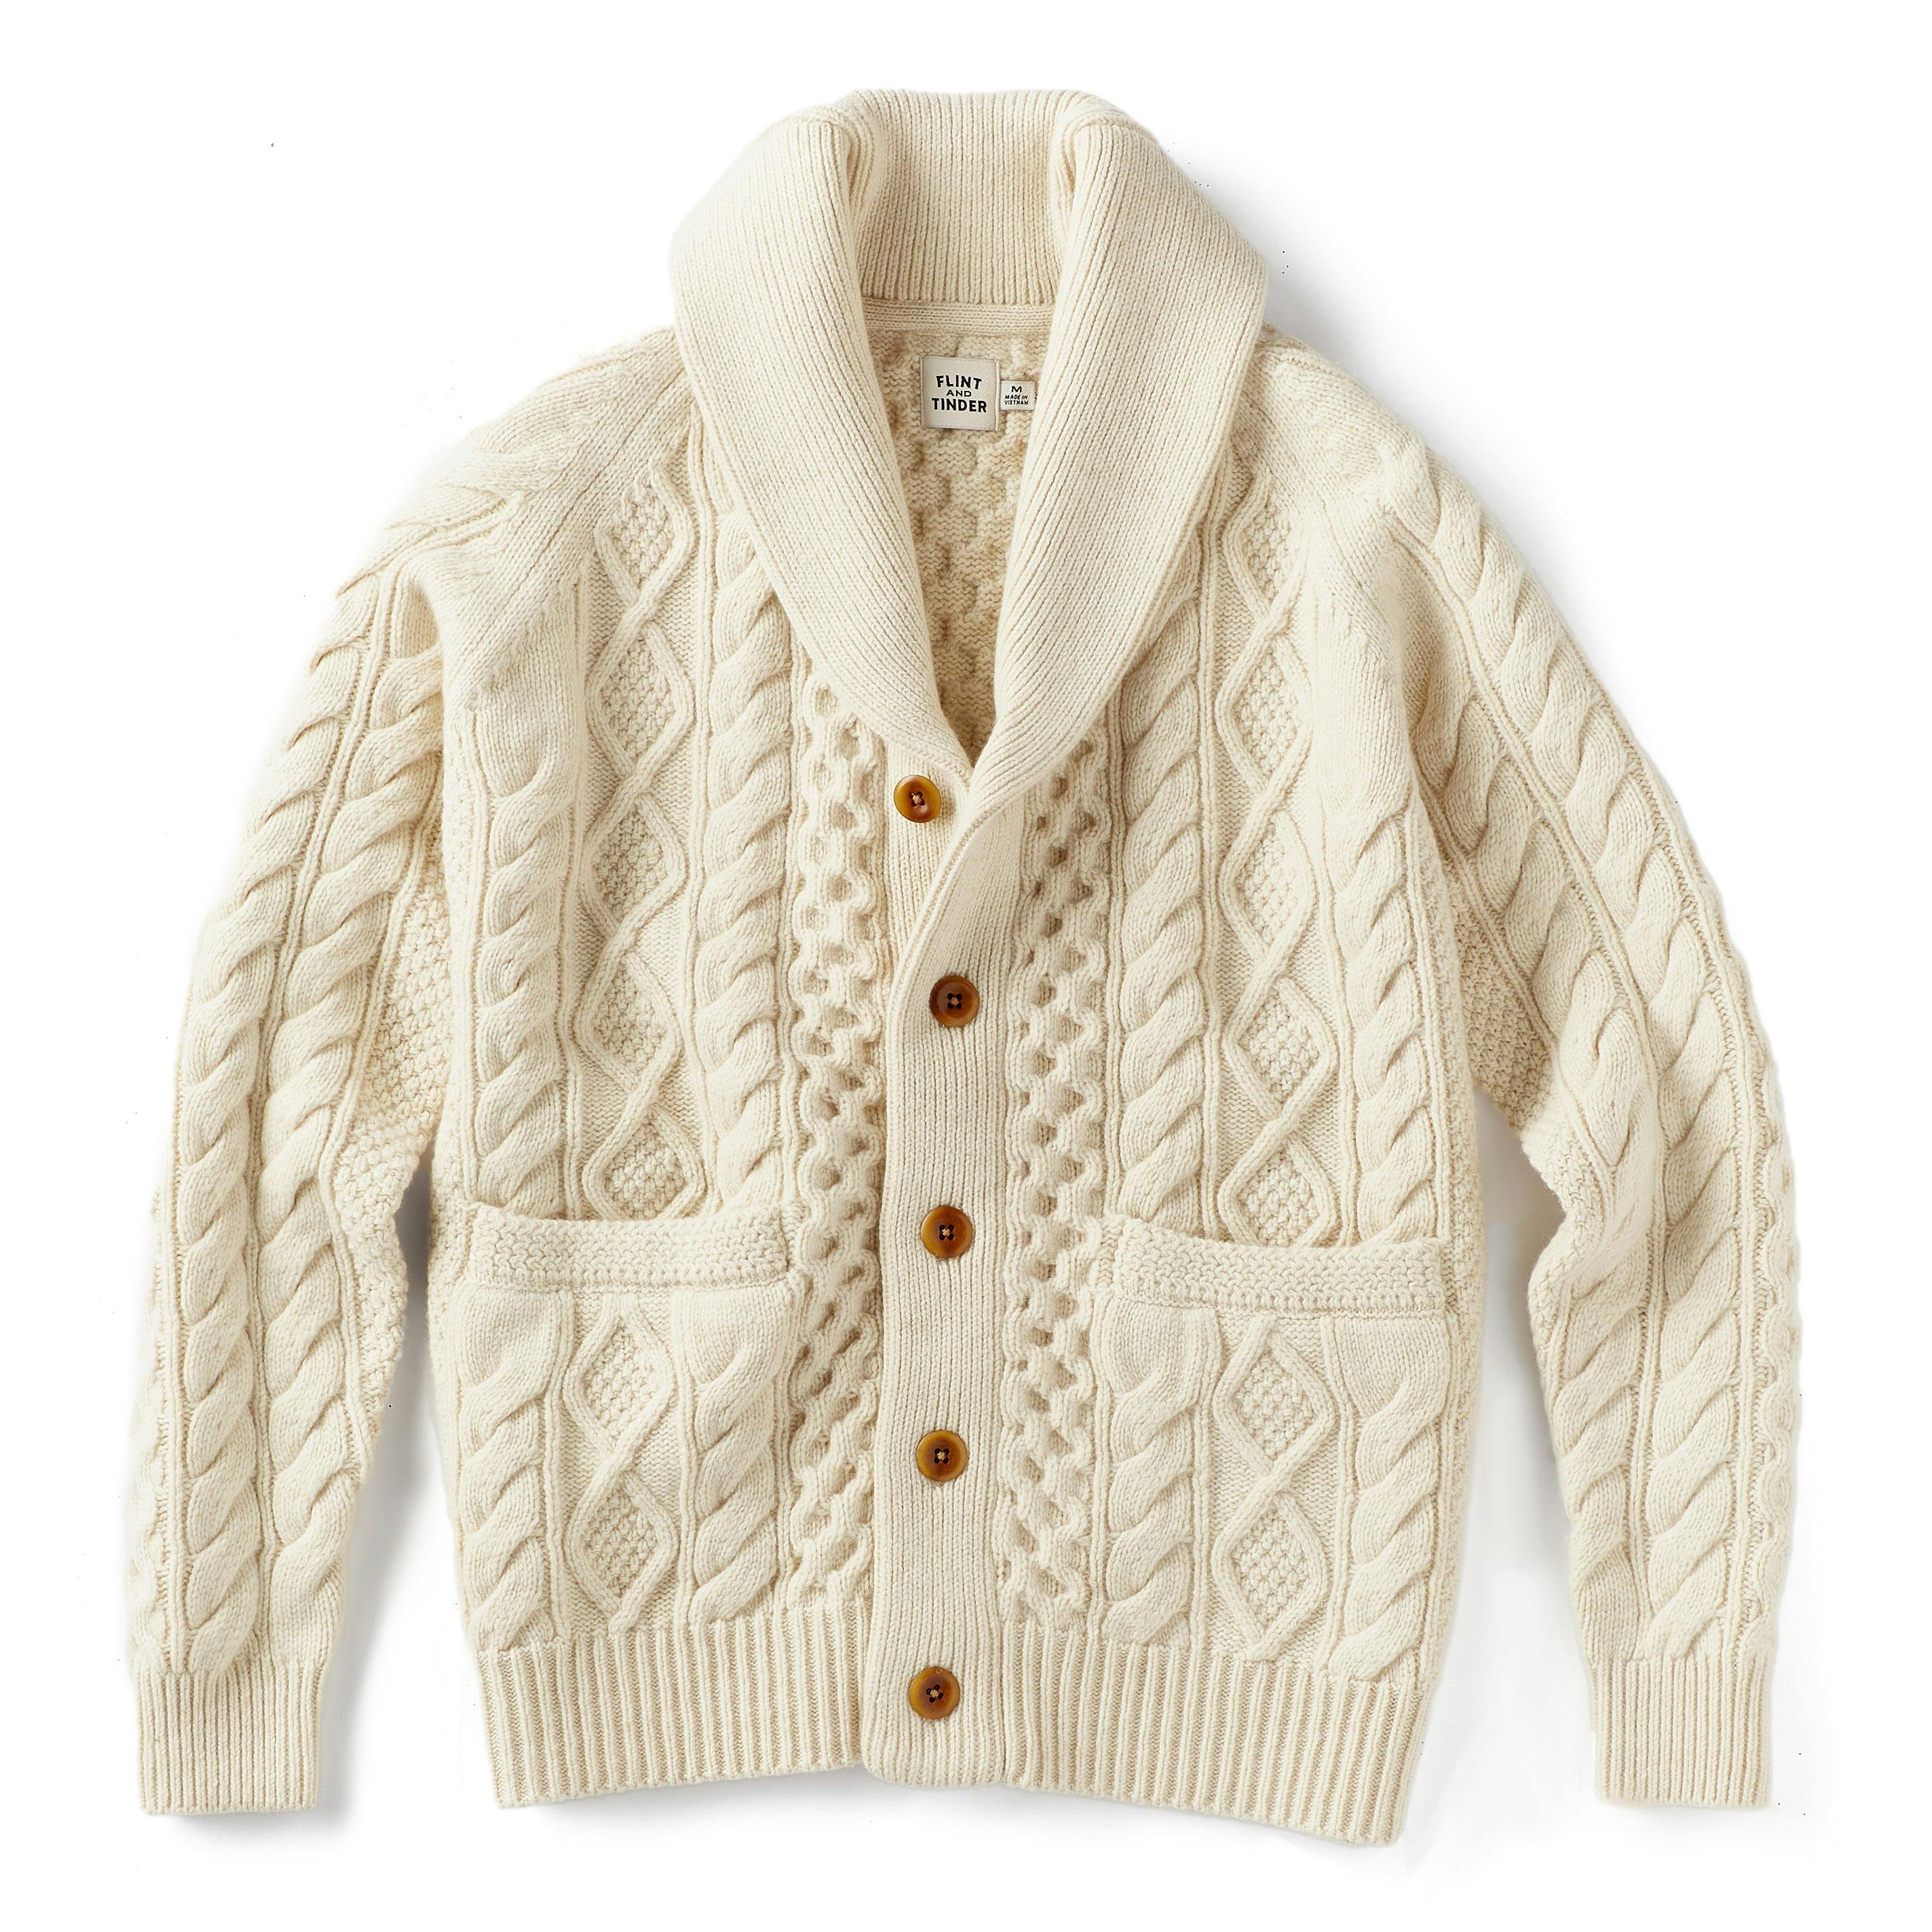 Flint and Tinder Aran Cable Knit Cardigan Sweater - Cream